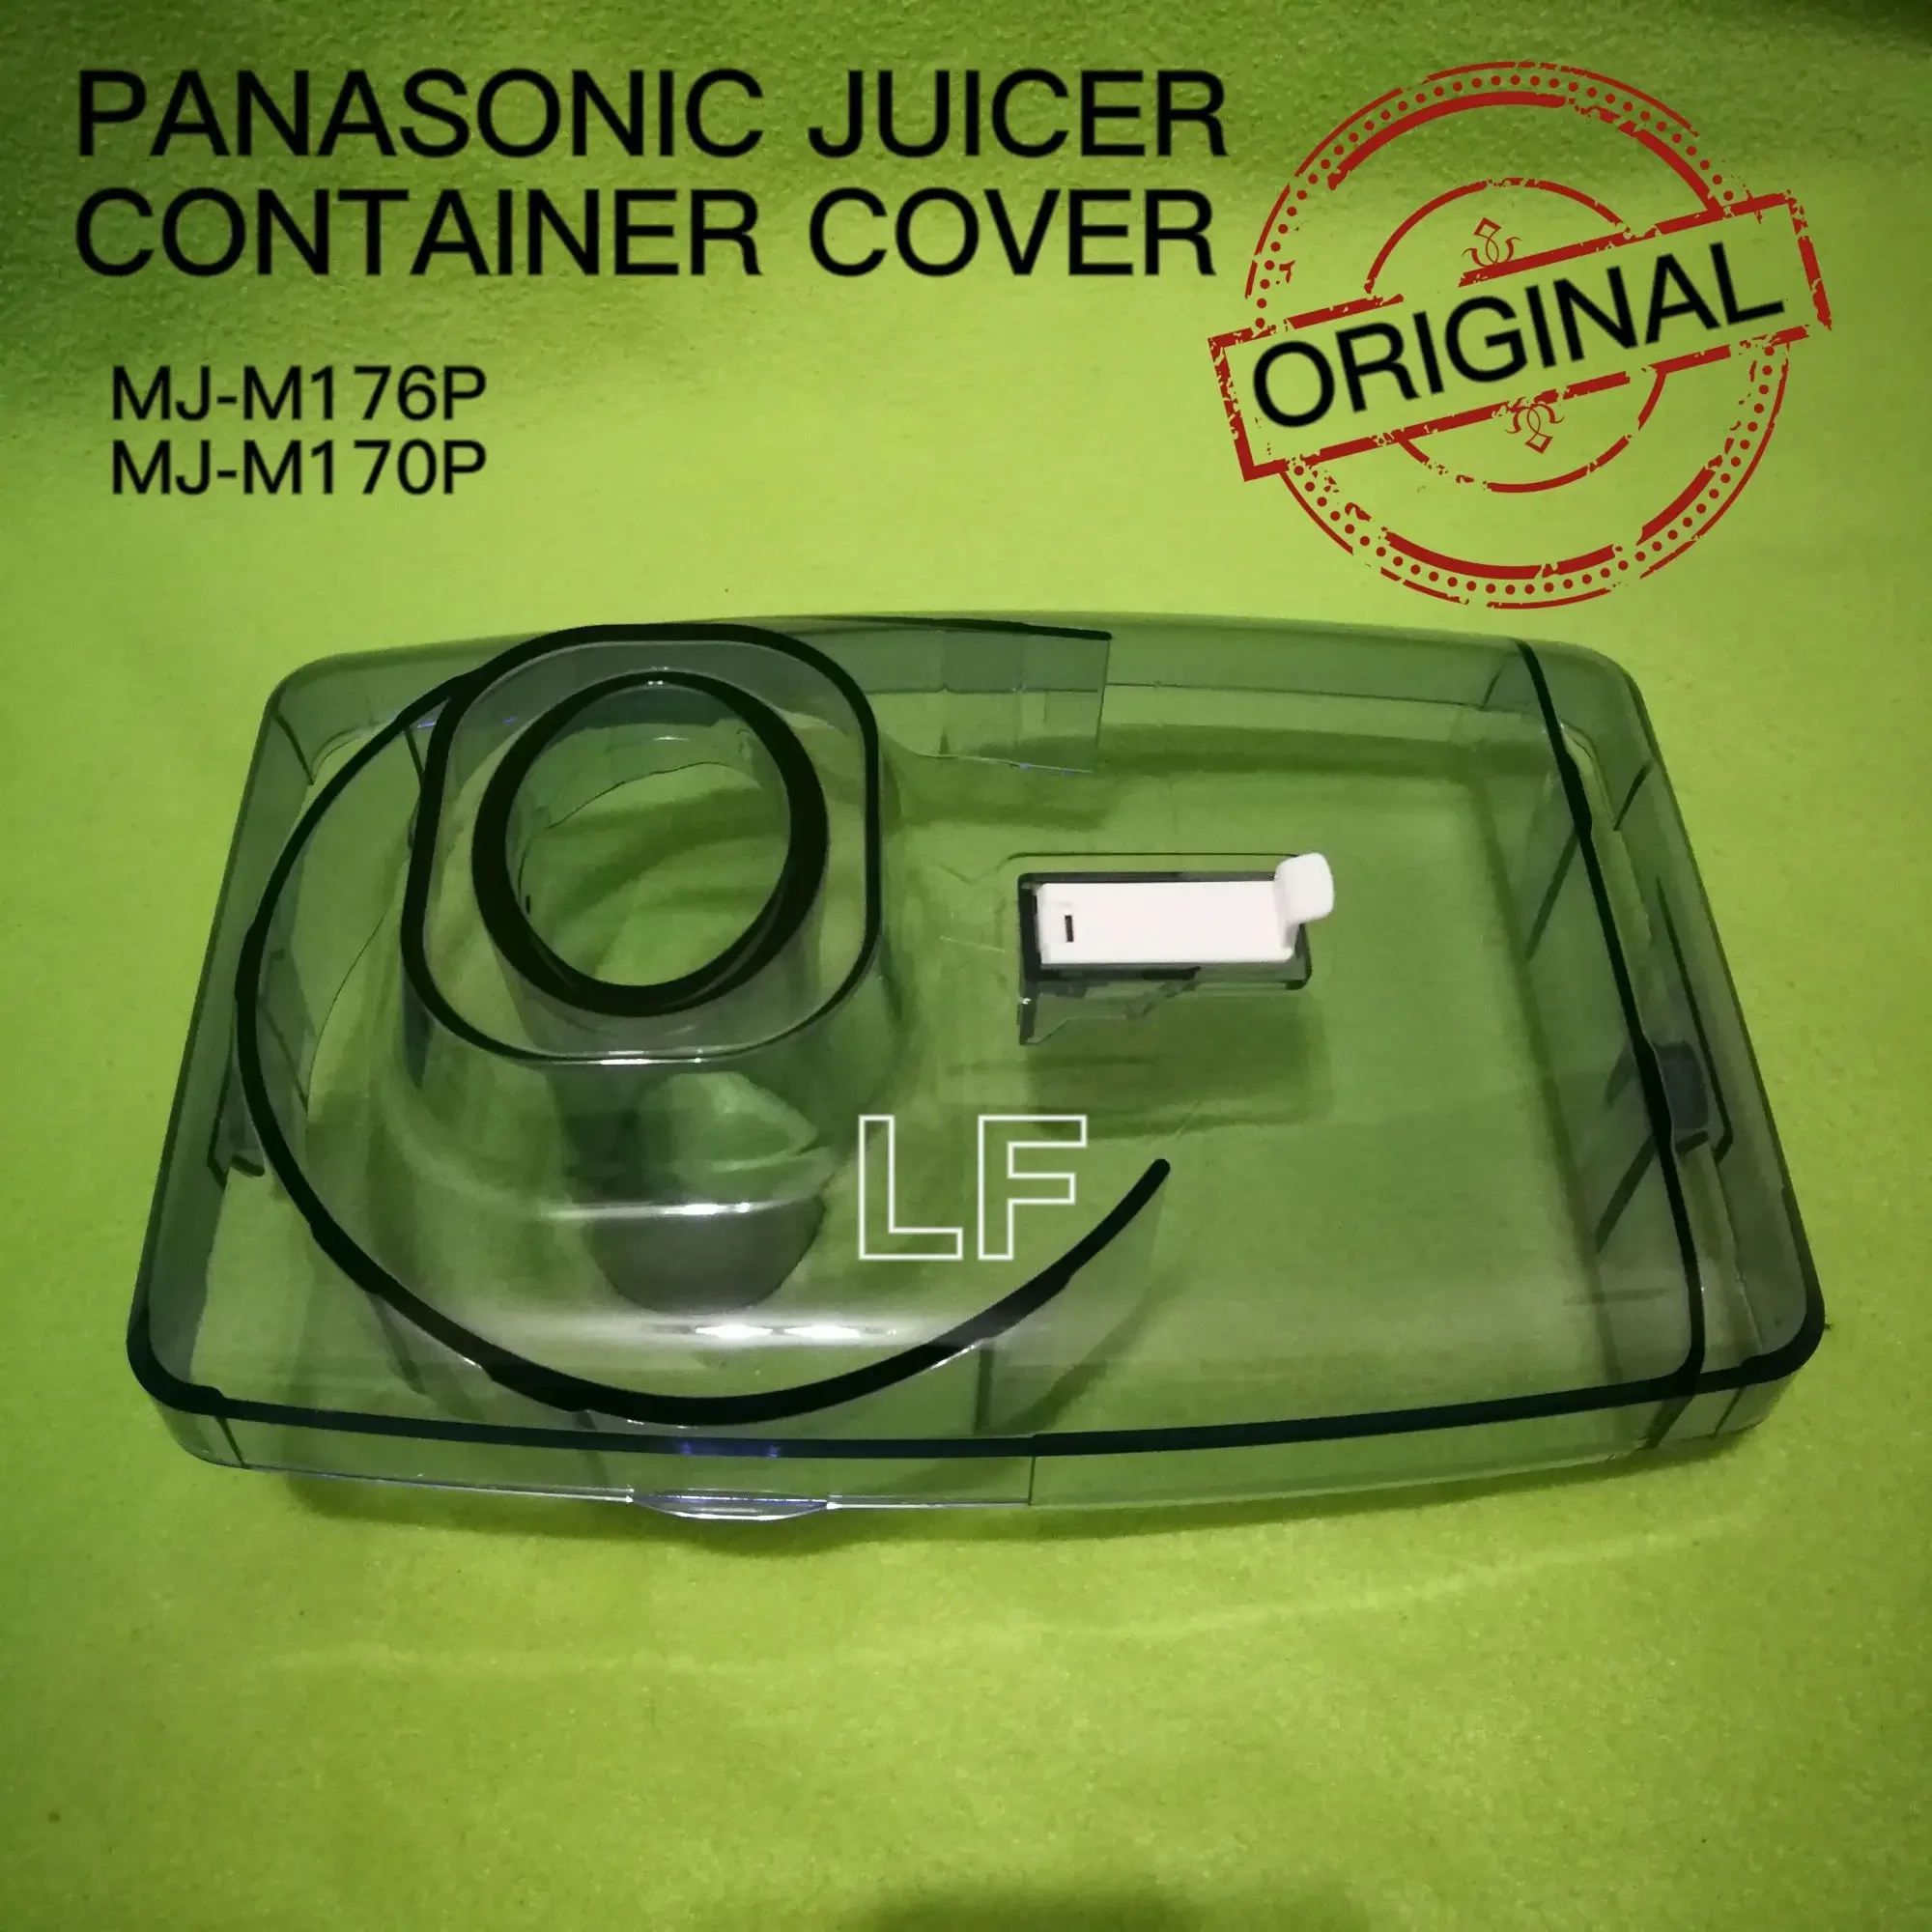 Panasonic MJ-M170P MJ-M176P Juicer Container Cover